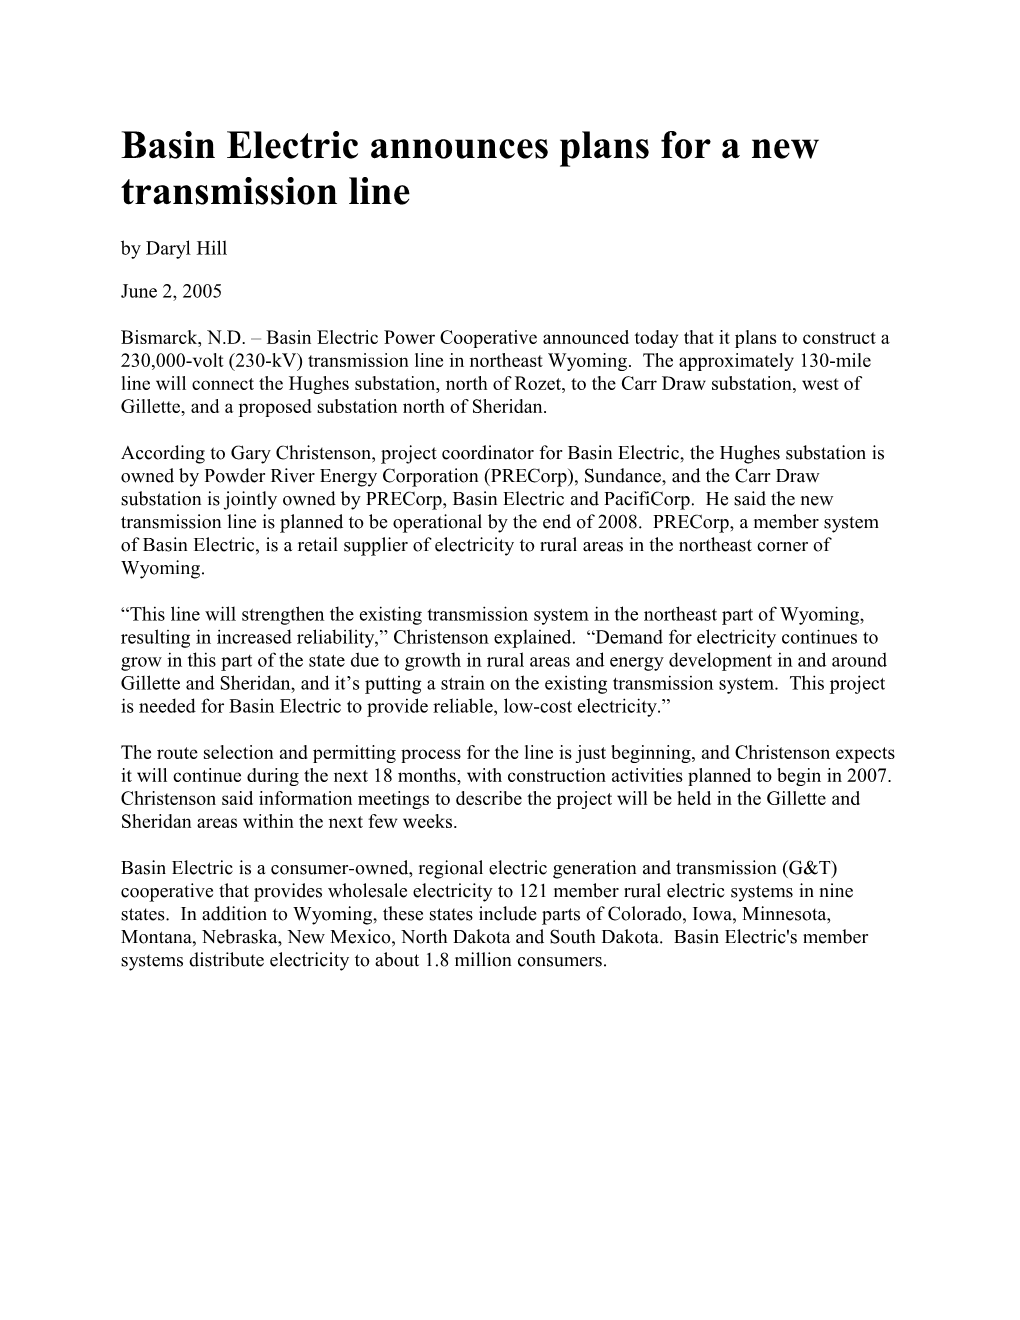 Basin Electric Announces Plans for a New Transmission Line